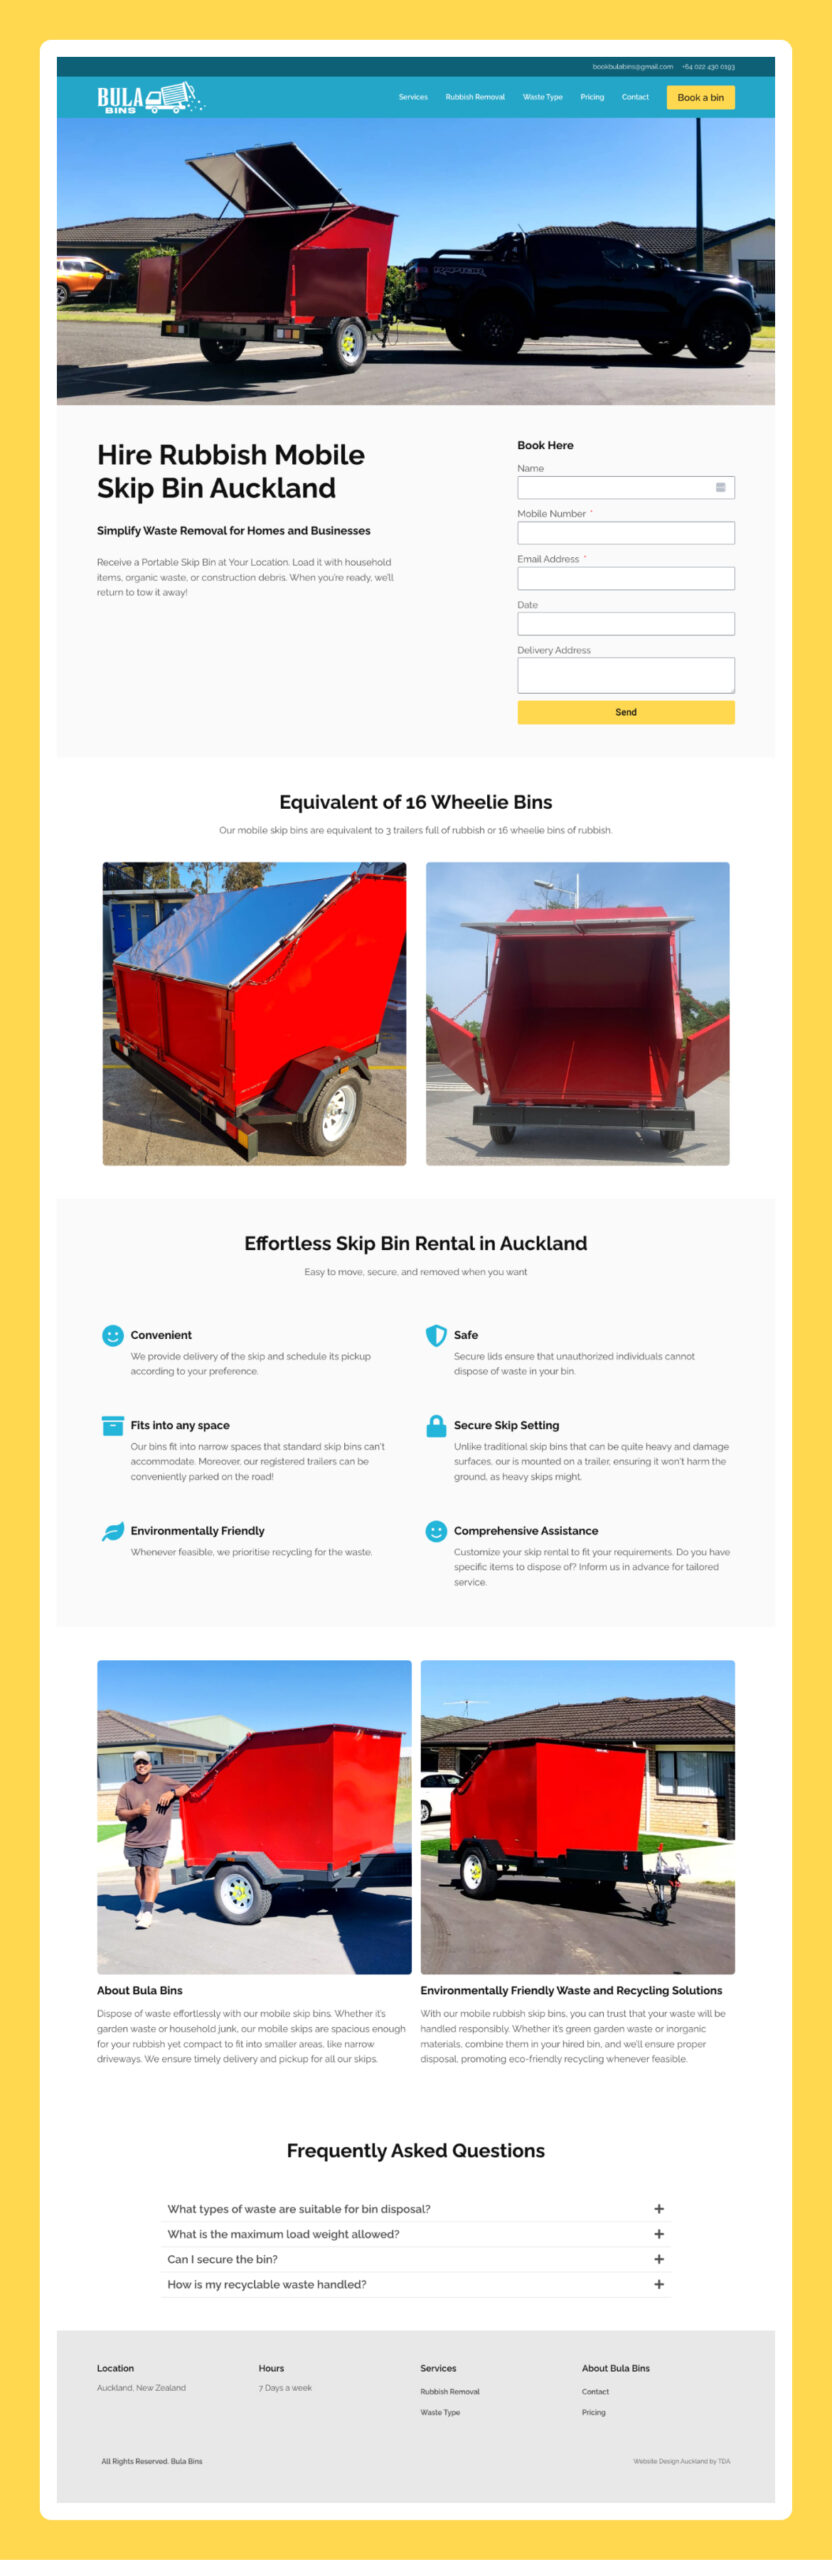 Bula Bins mobile waste removal homepage